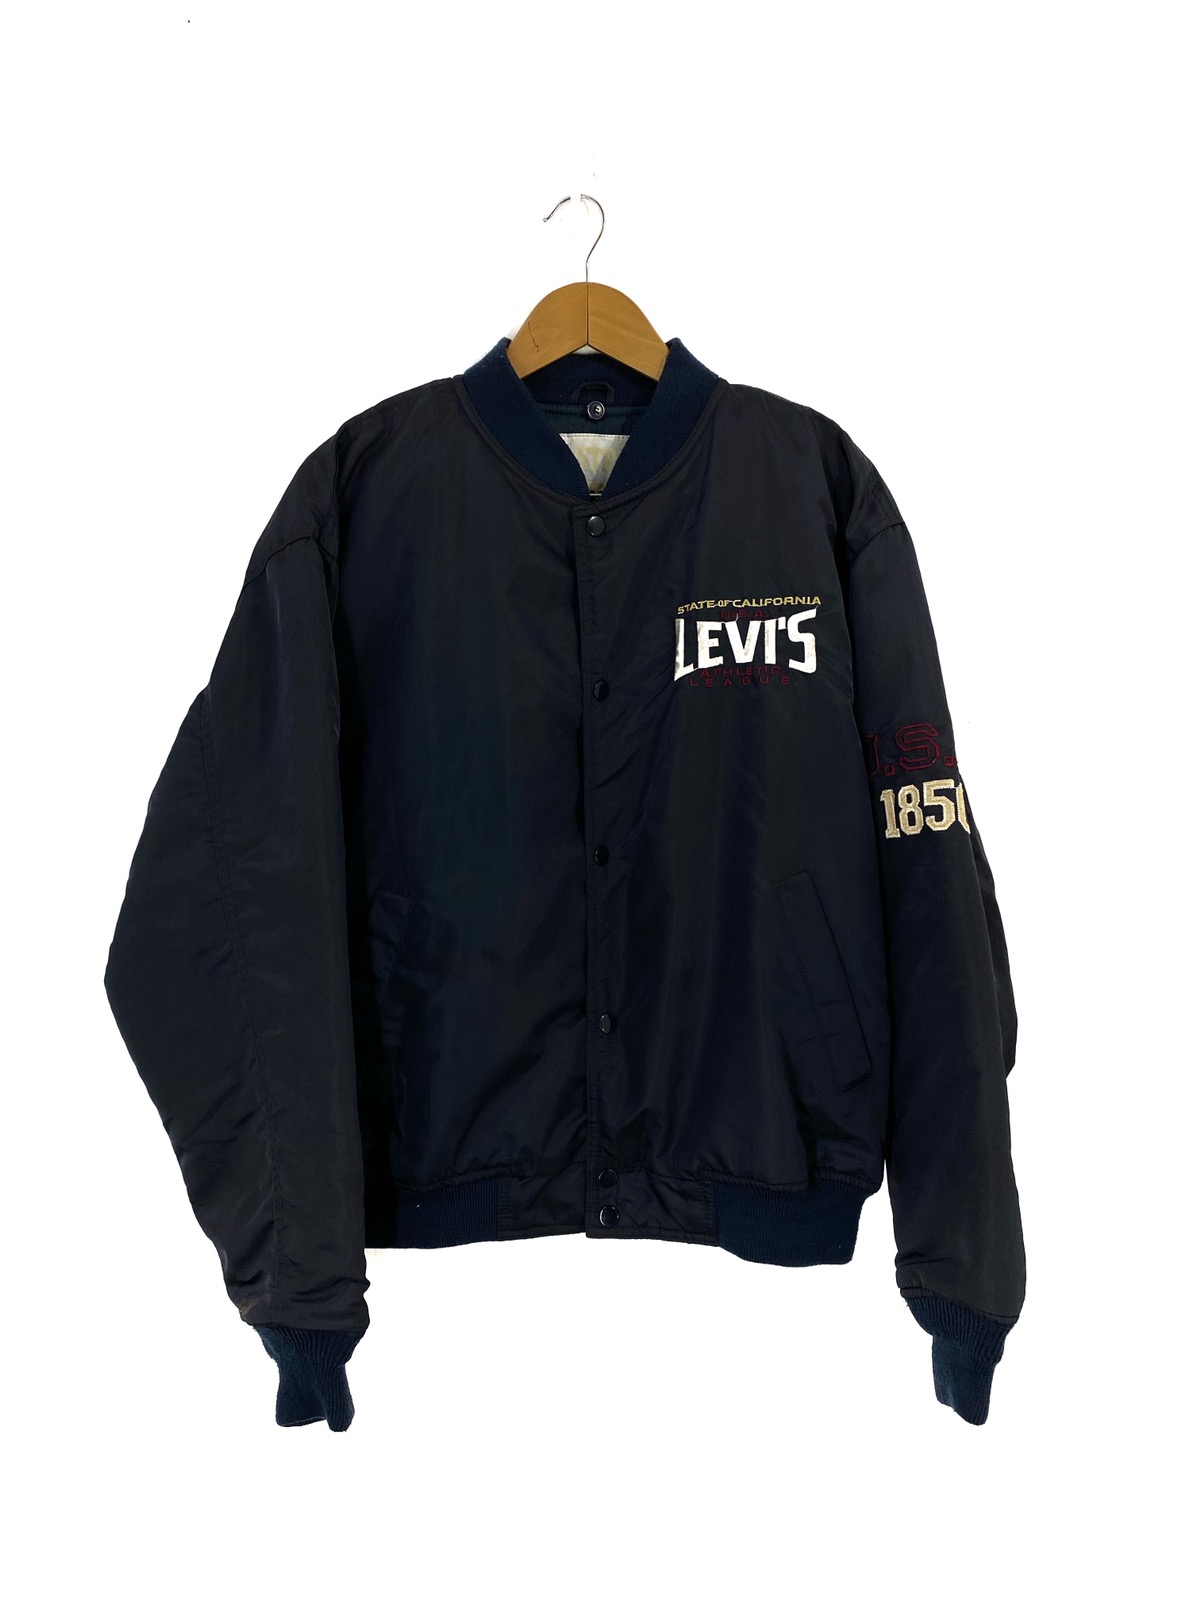 Levi's Levi's Bomber Jacket Big Logo Levi's San Francisco Design, letto